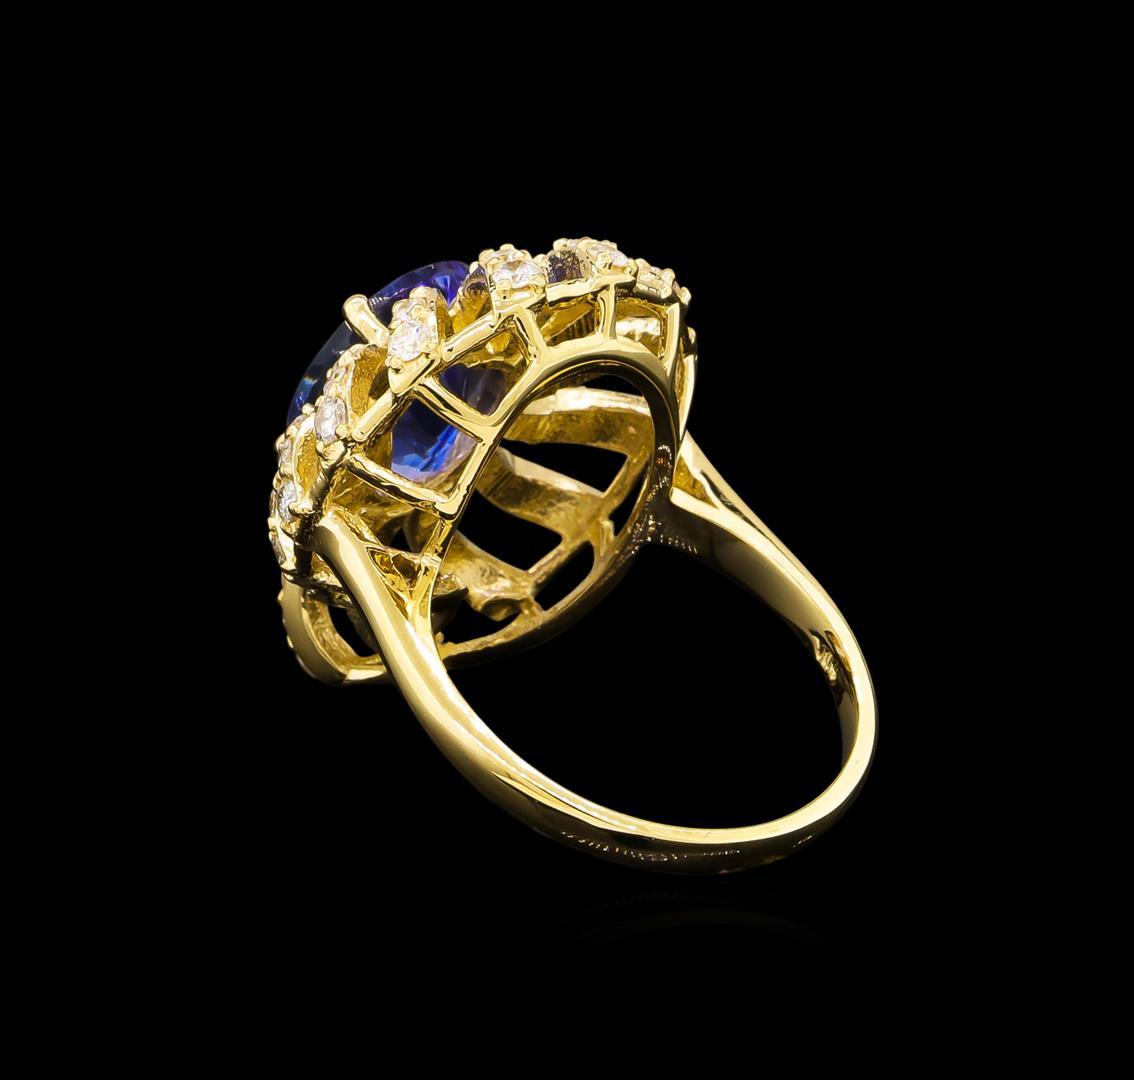 3.76 ctw Tanzanite and Diamond Ring - 14KT Yellow Gold